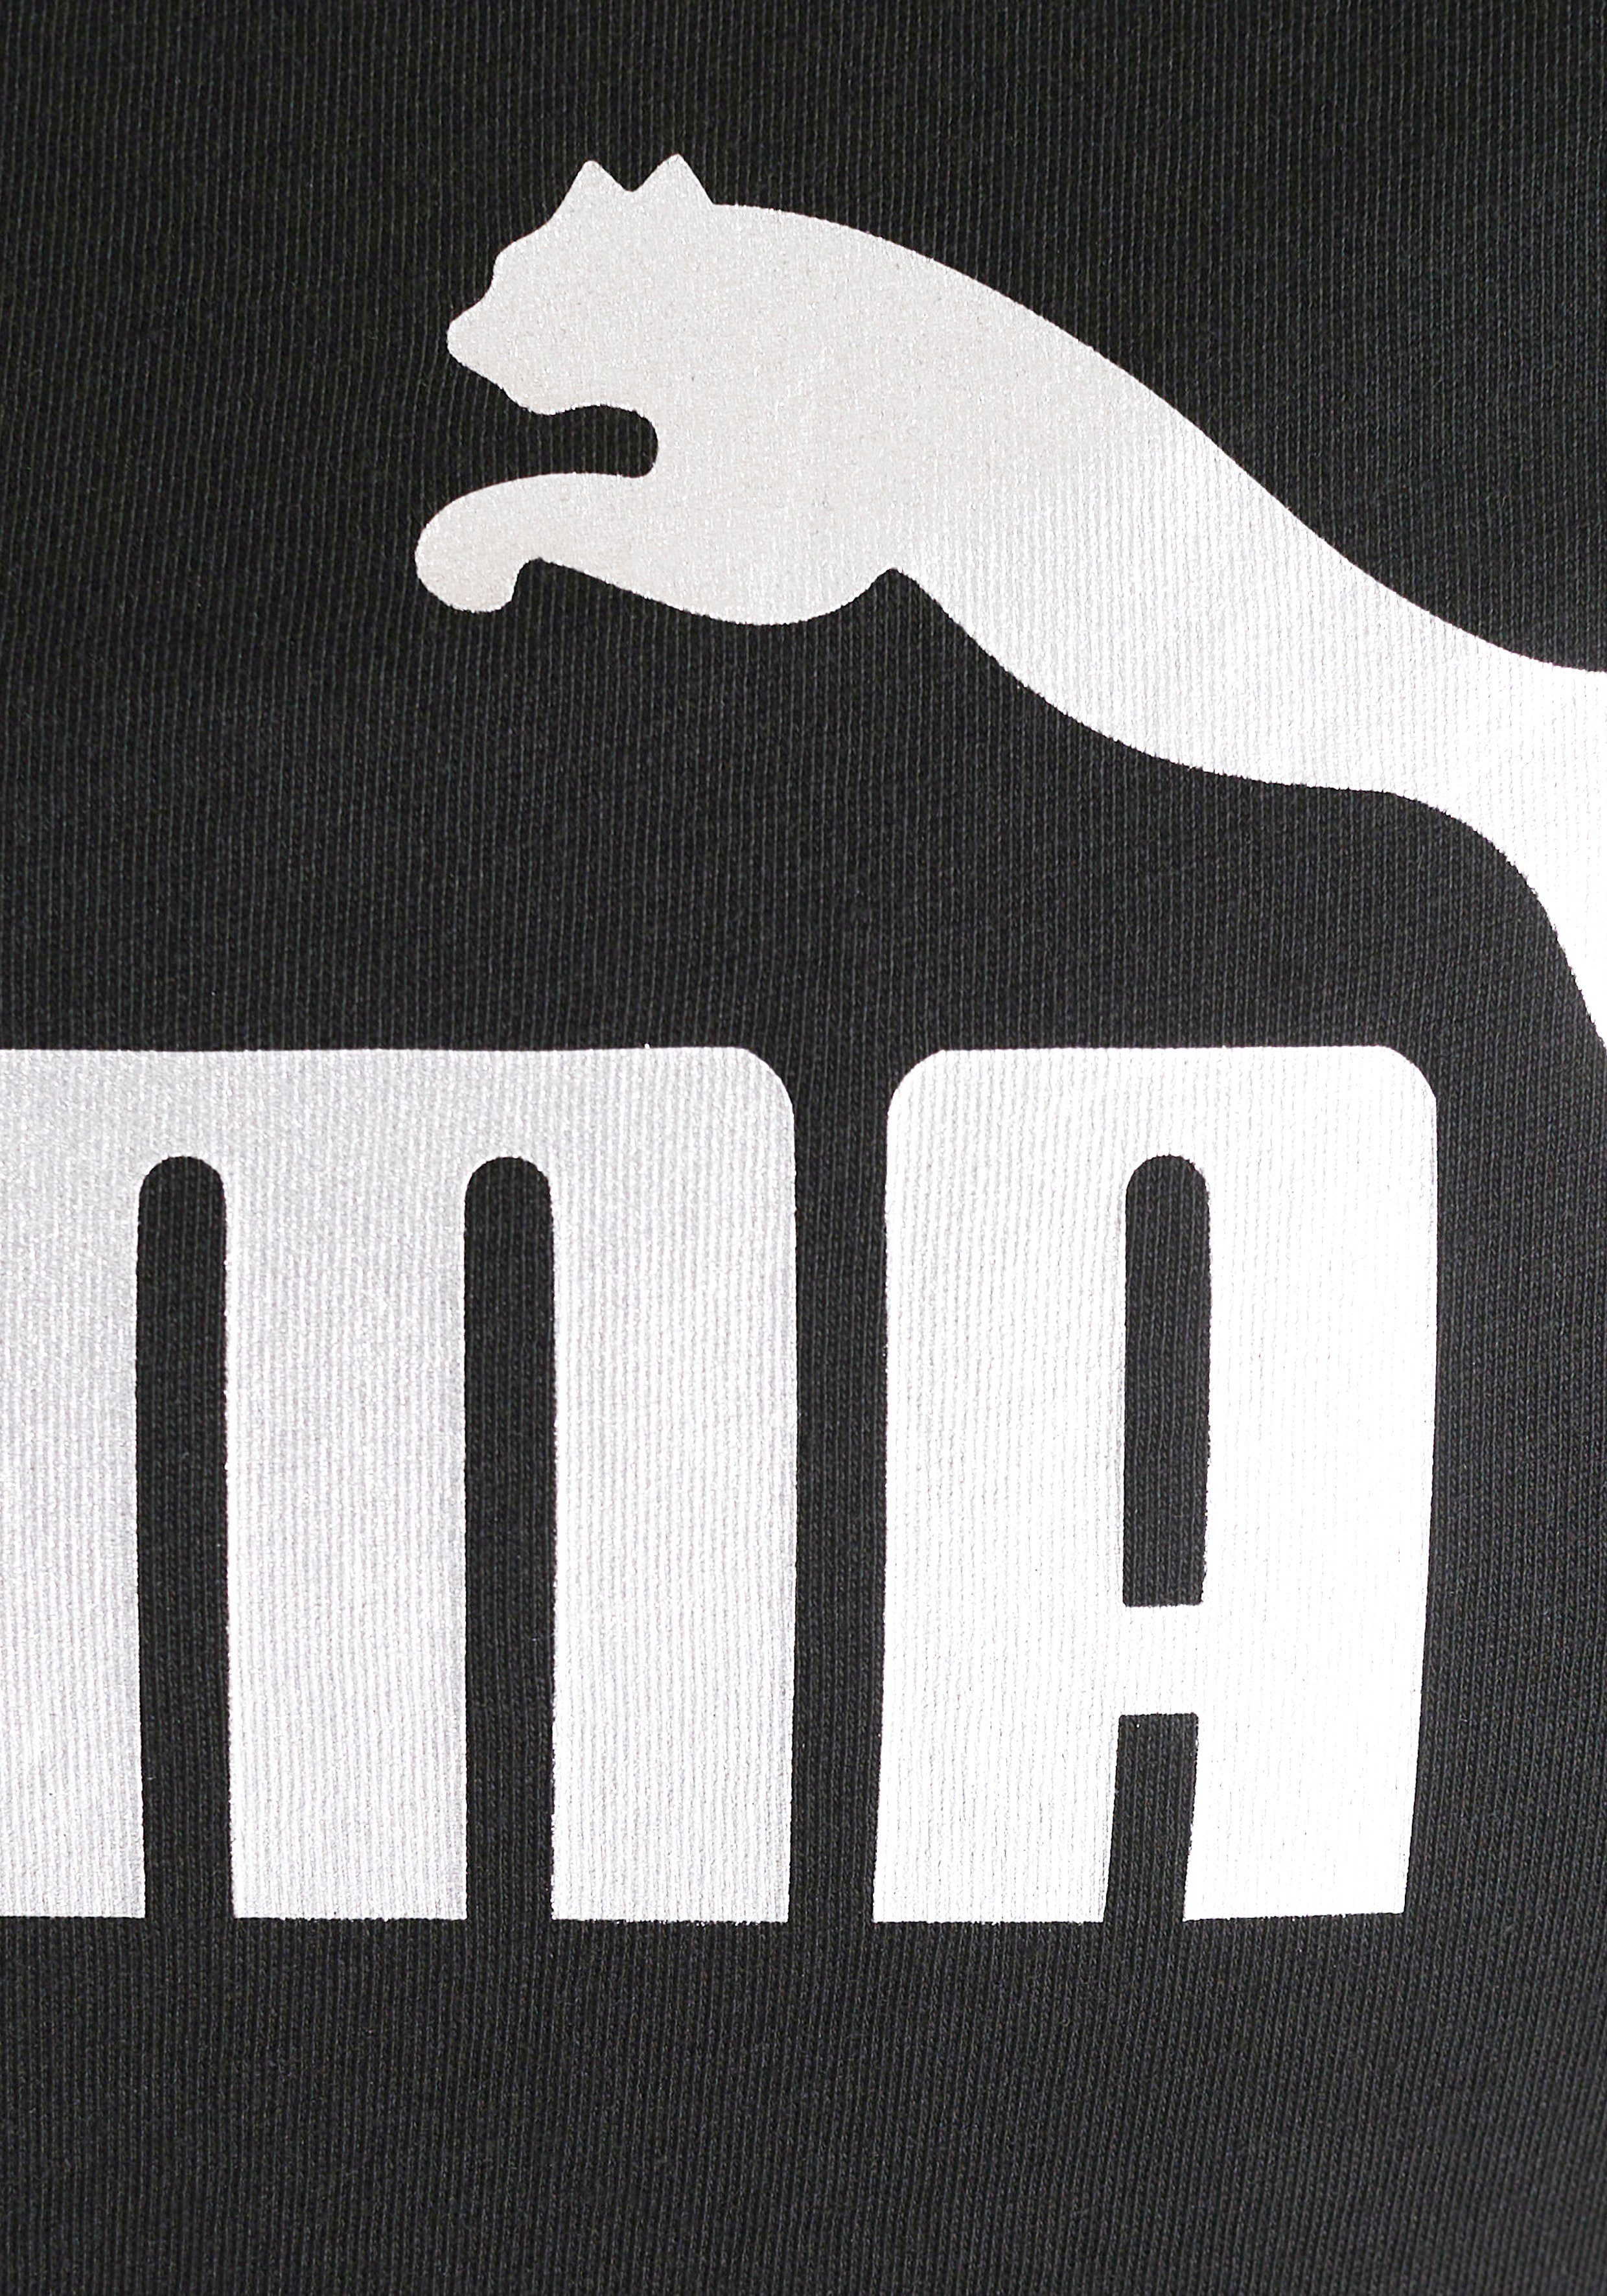 PUMA T-Shirt ESS+ Puma LOGO TEE metallic Black-silver METALLIC